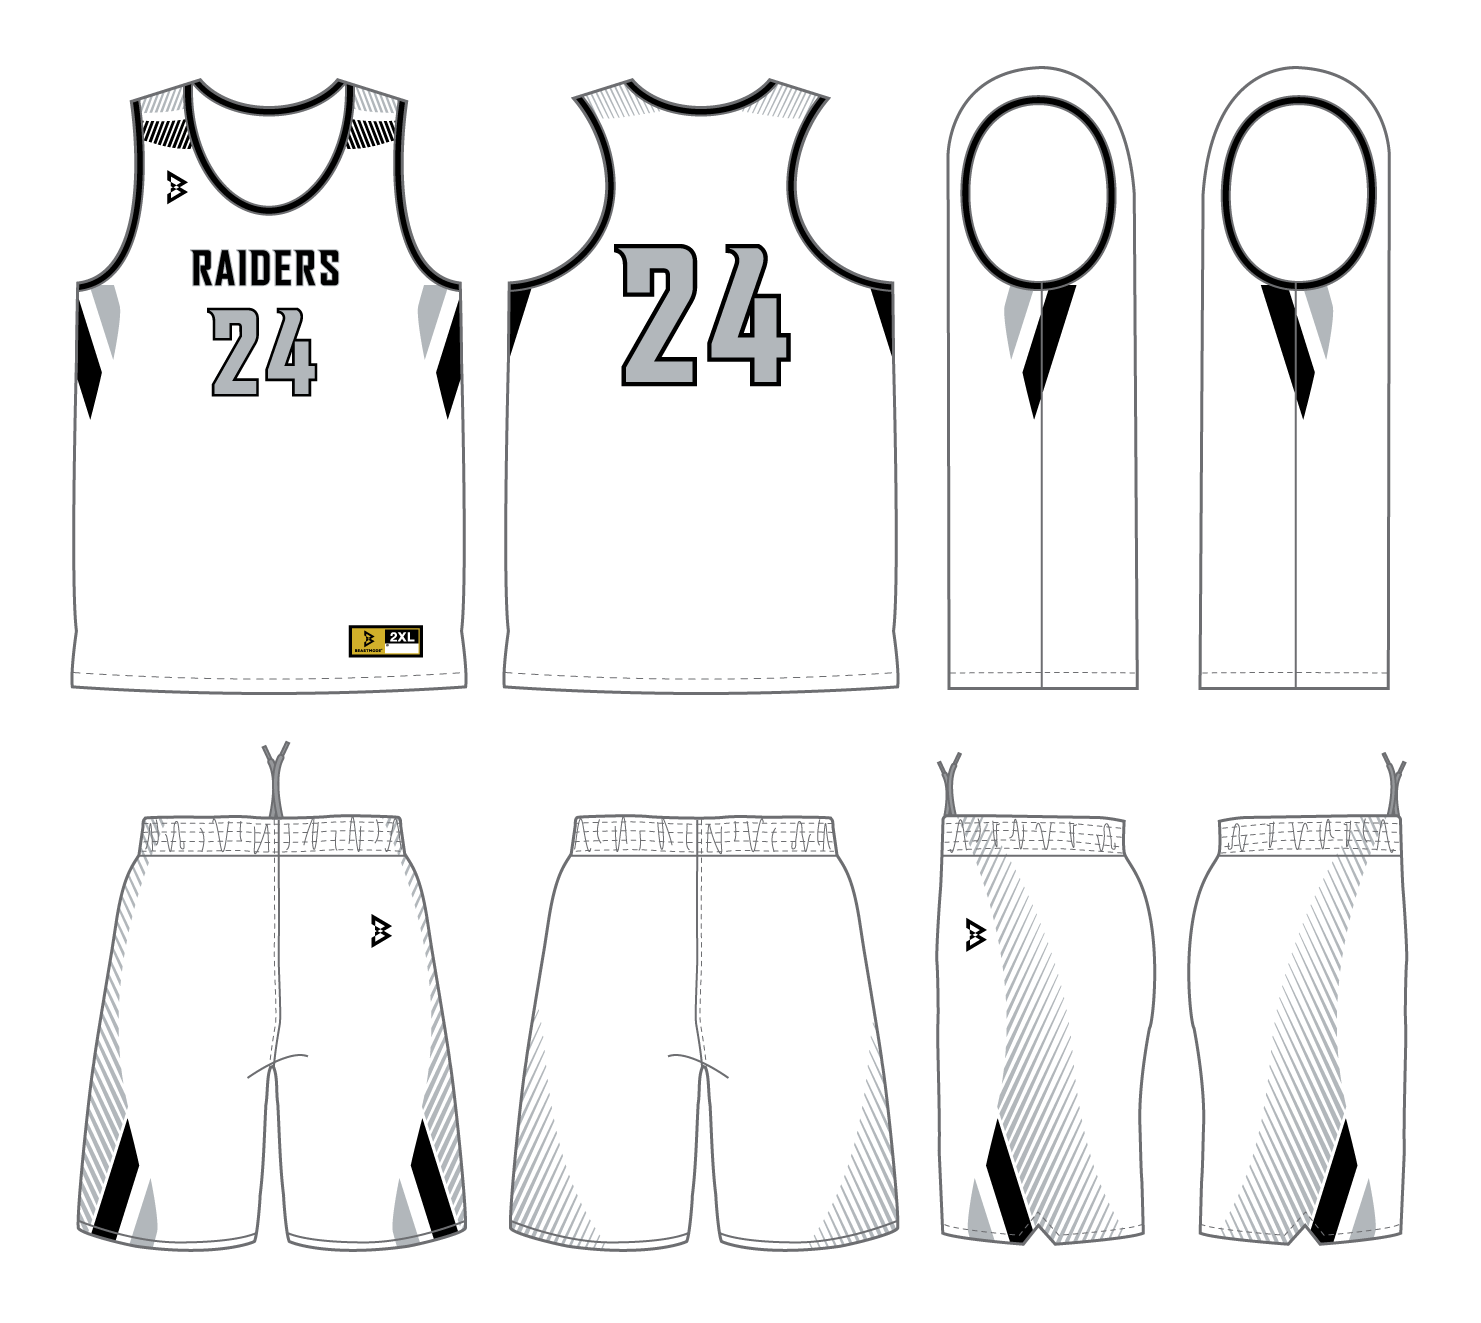 Custom All-Star Reversible Basketball Uniform - 101 Tiger XS-T / Women's